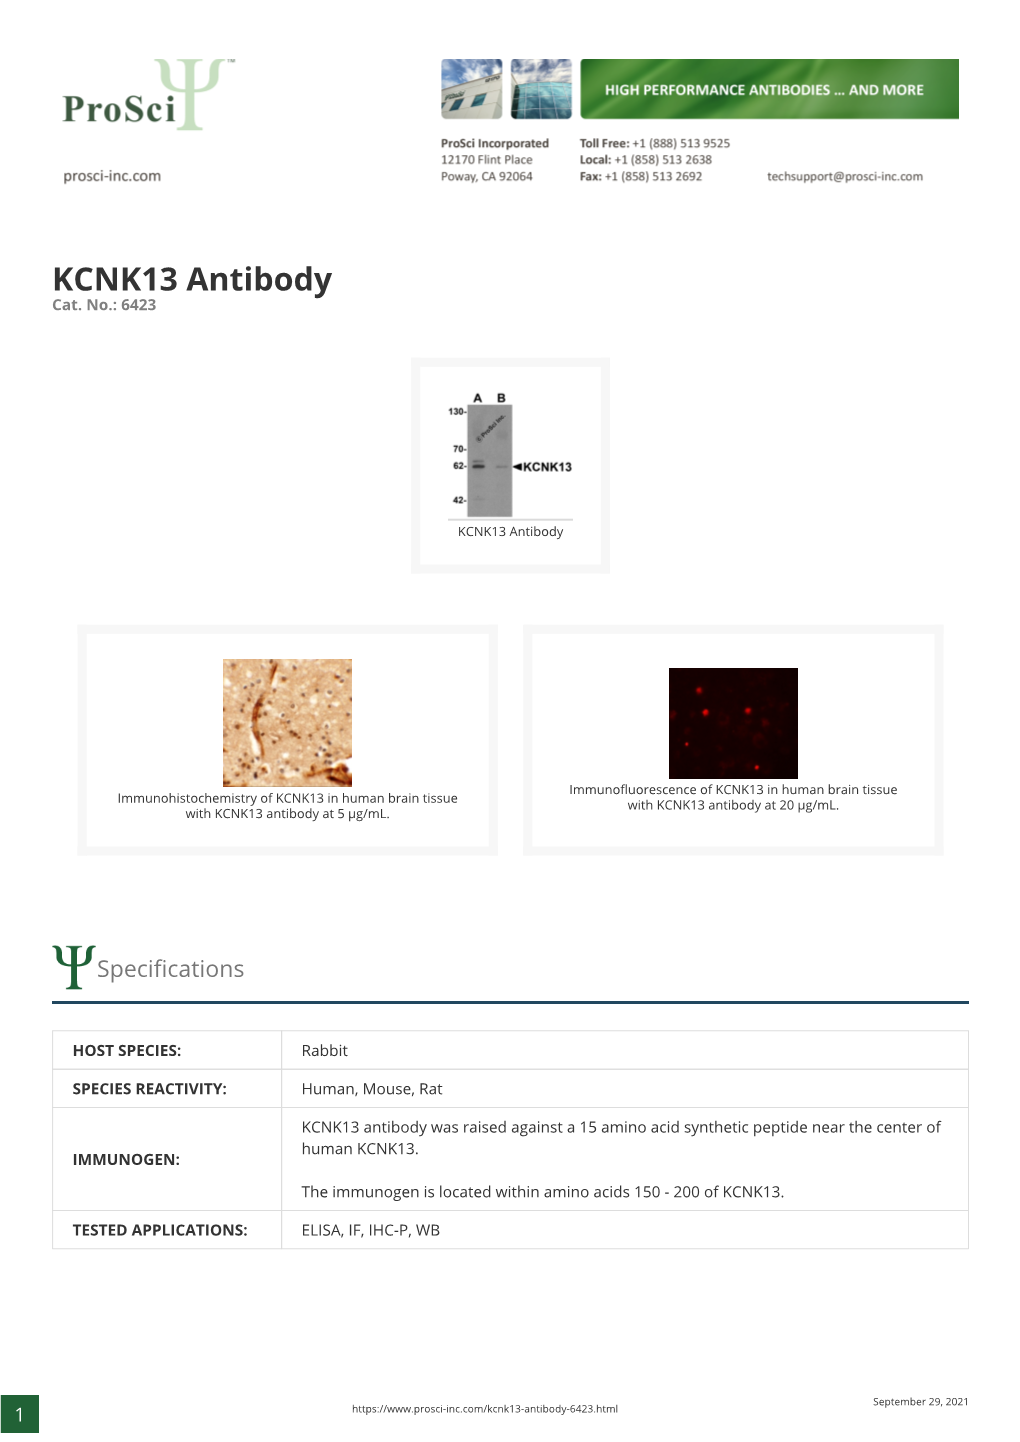 KCNK13 Antibody Cat